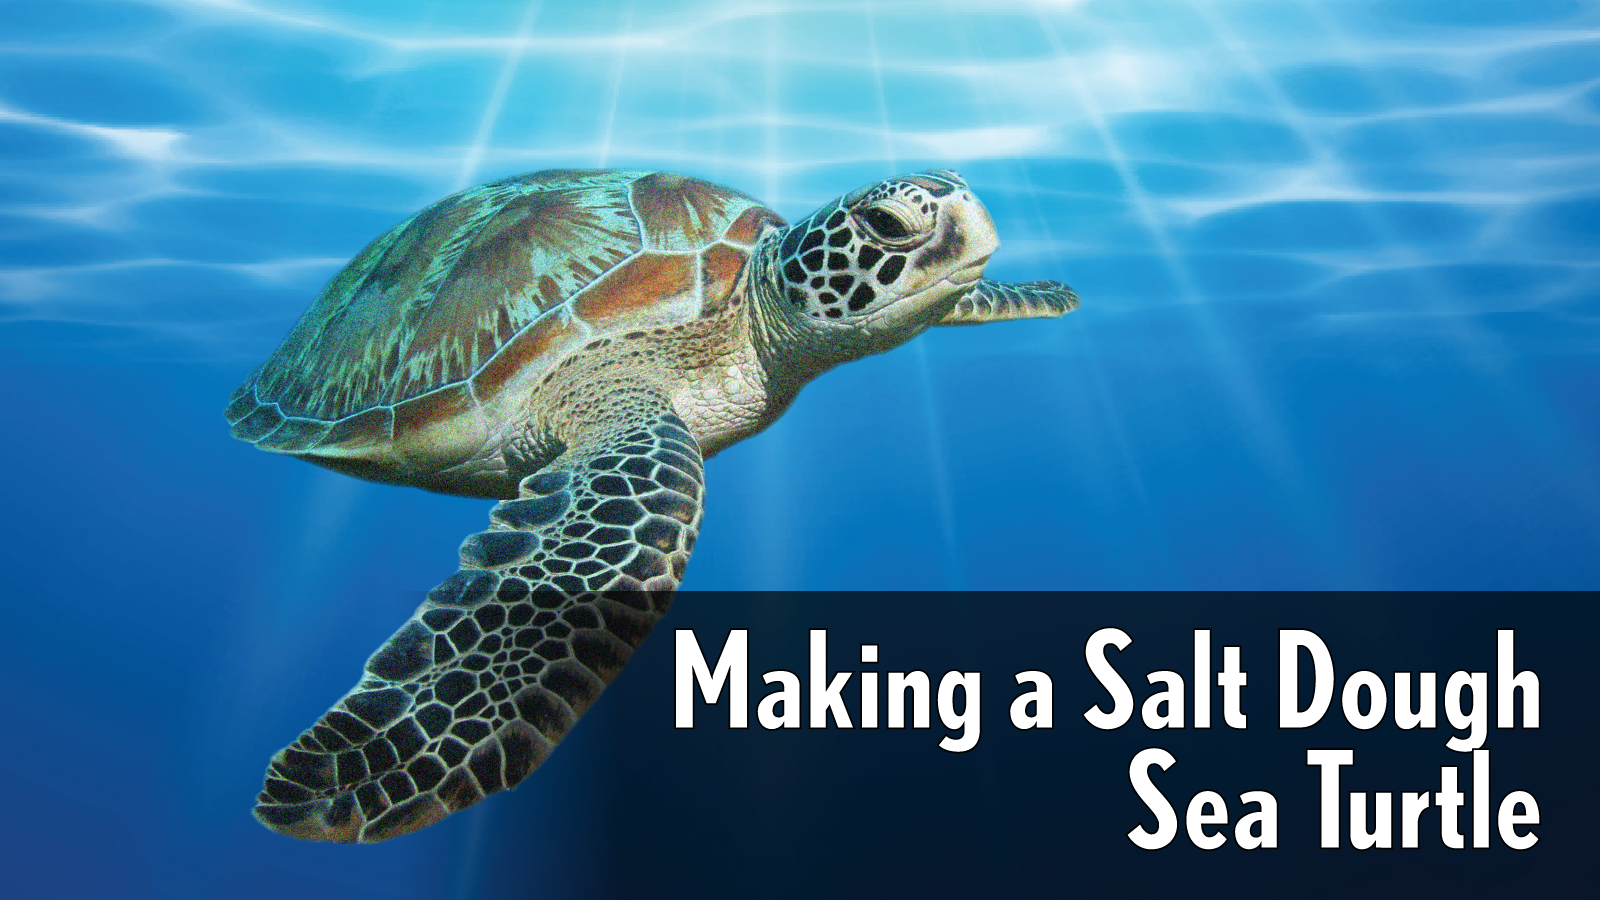 Making a Salt Dough Sea Turtle